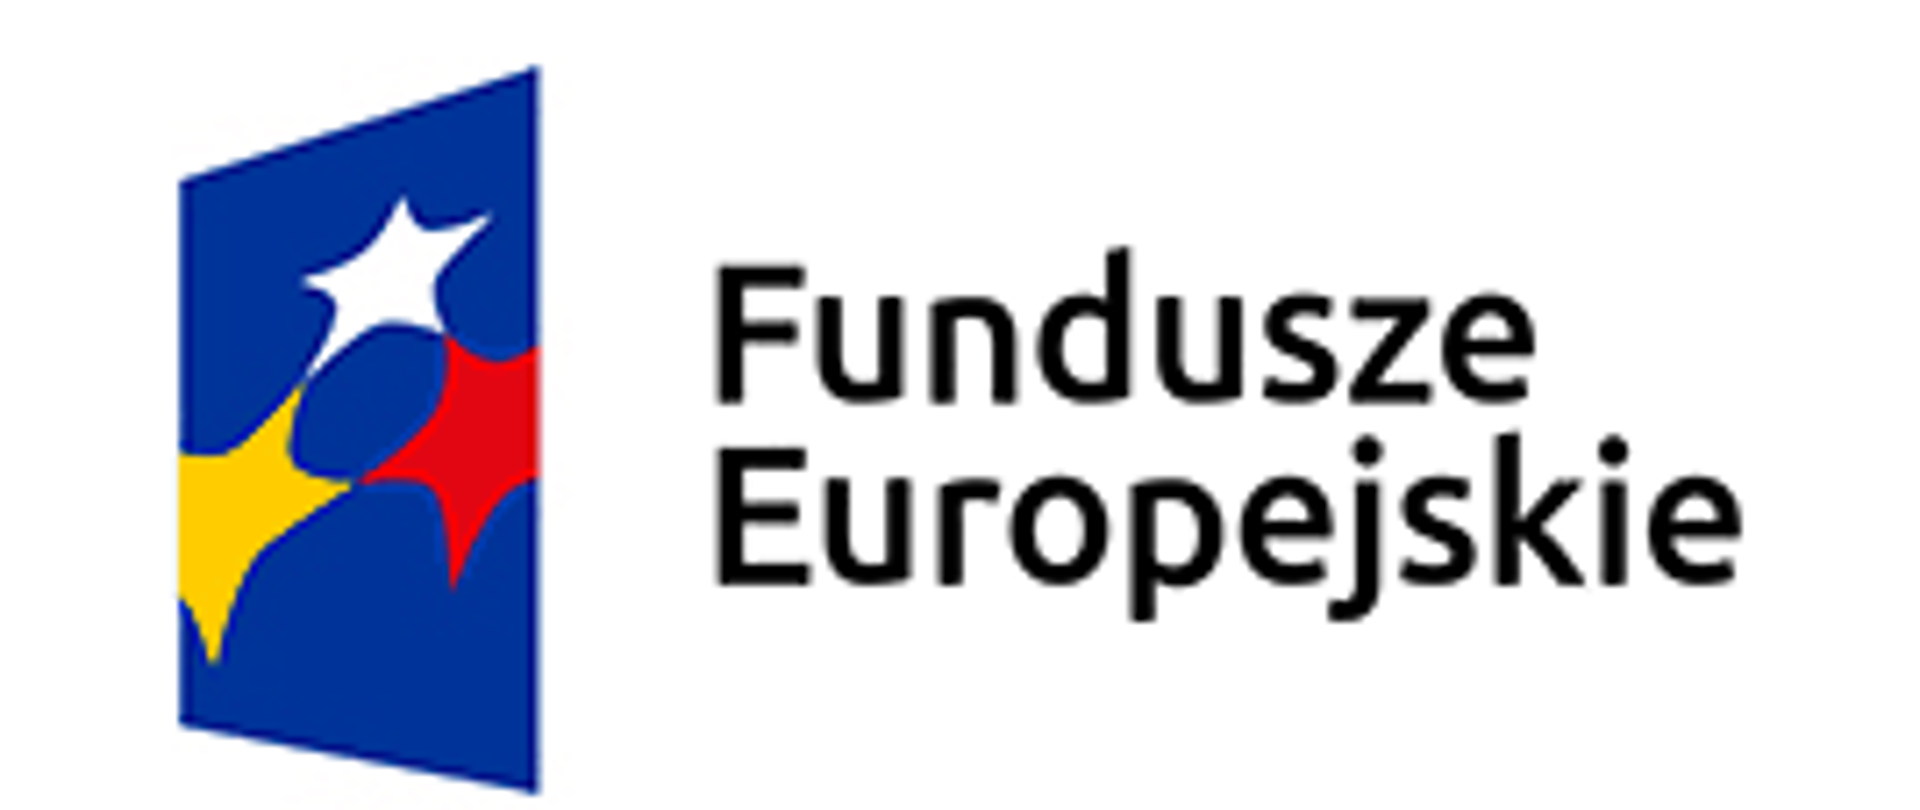 Fundusze Europejskie 